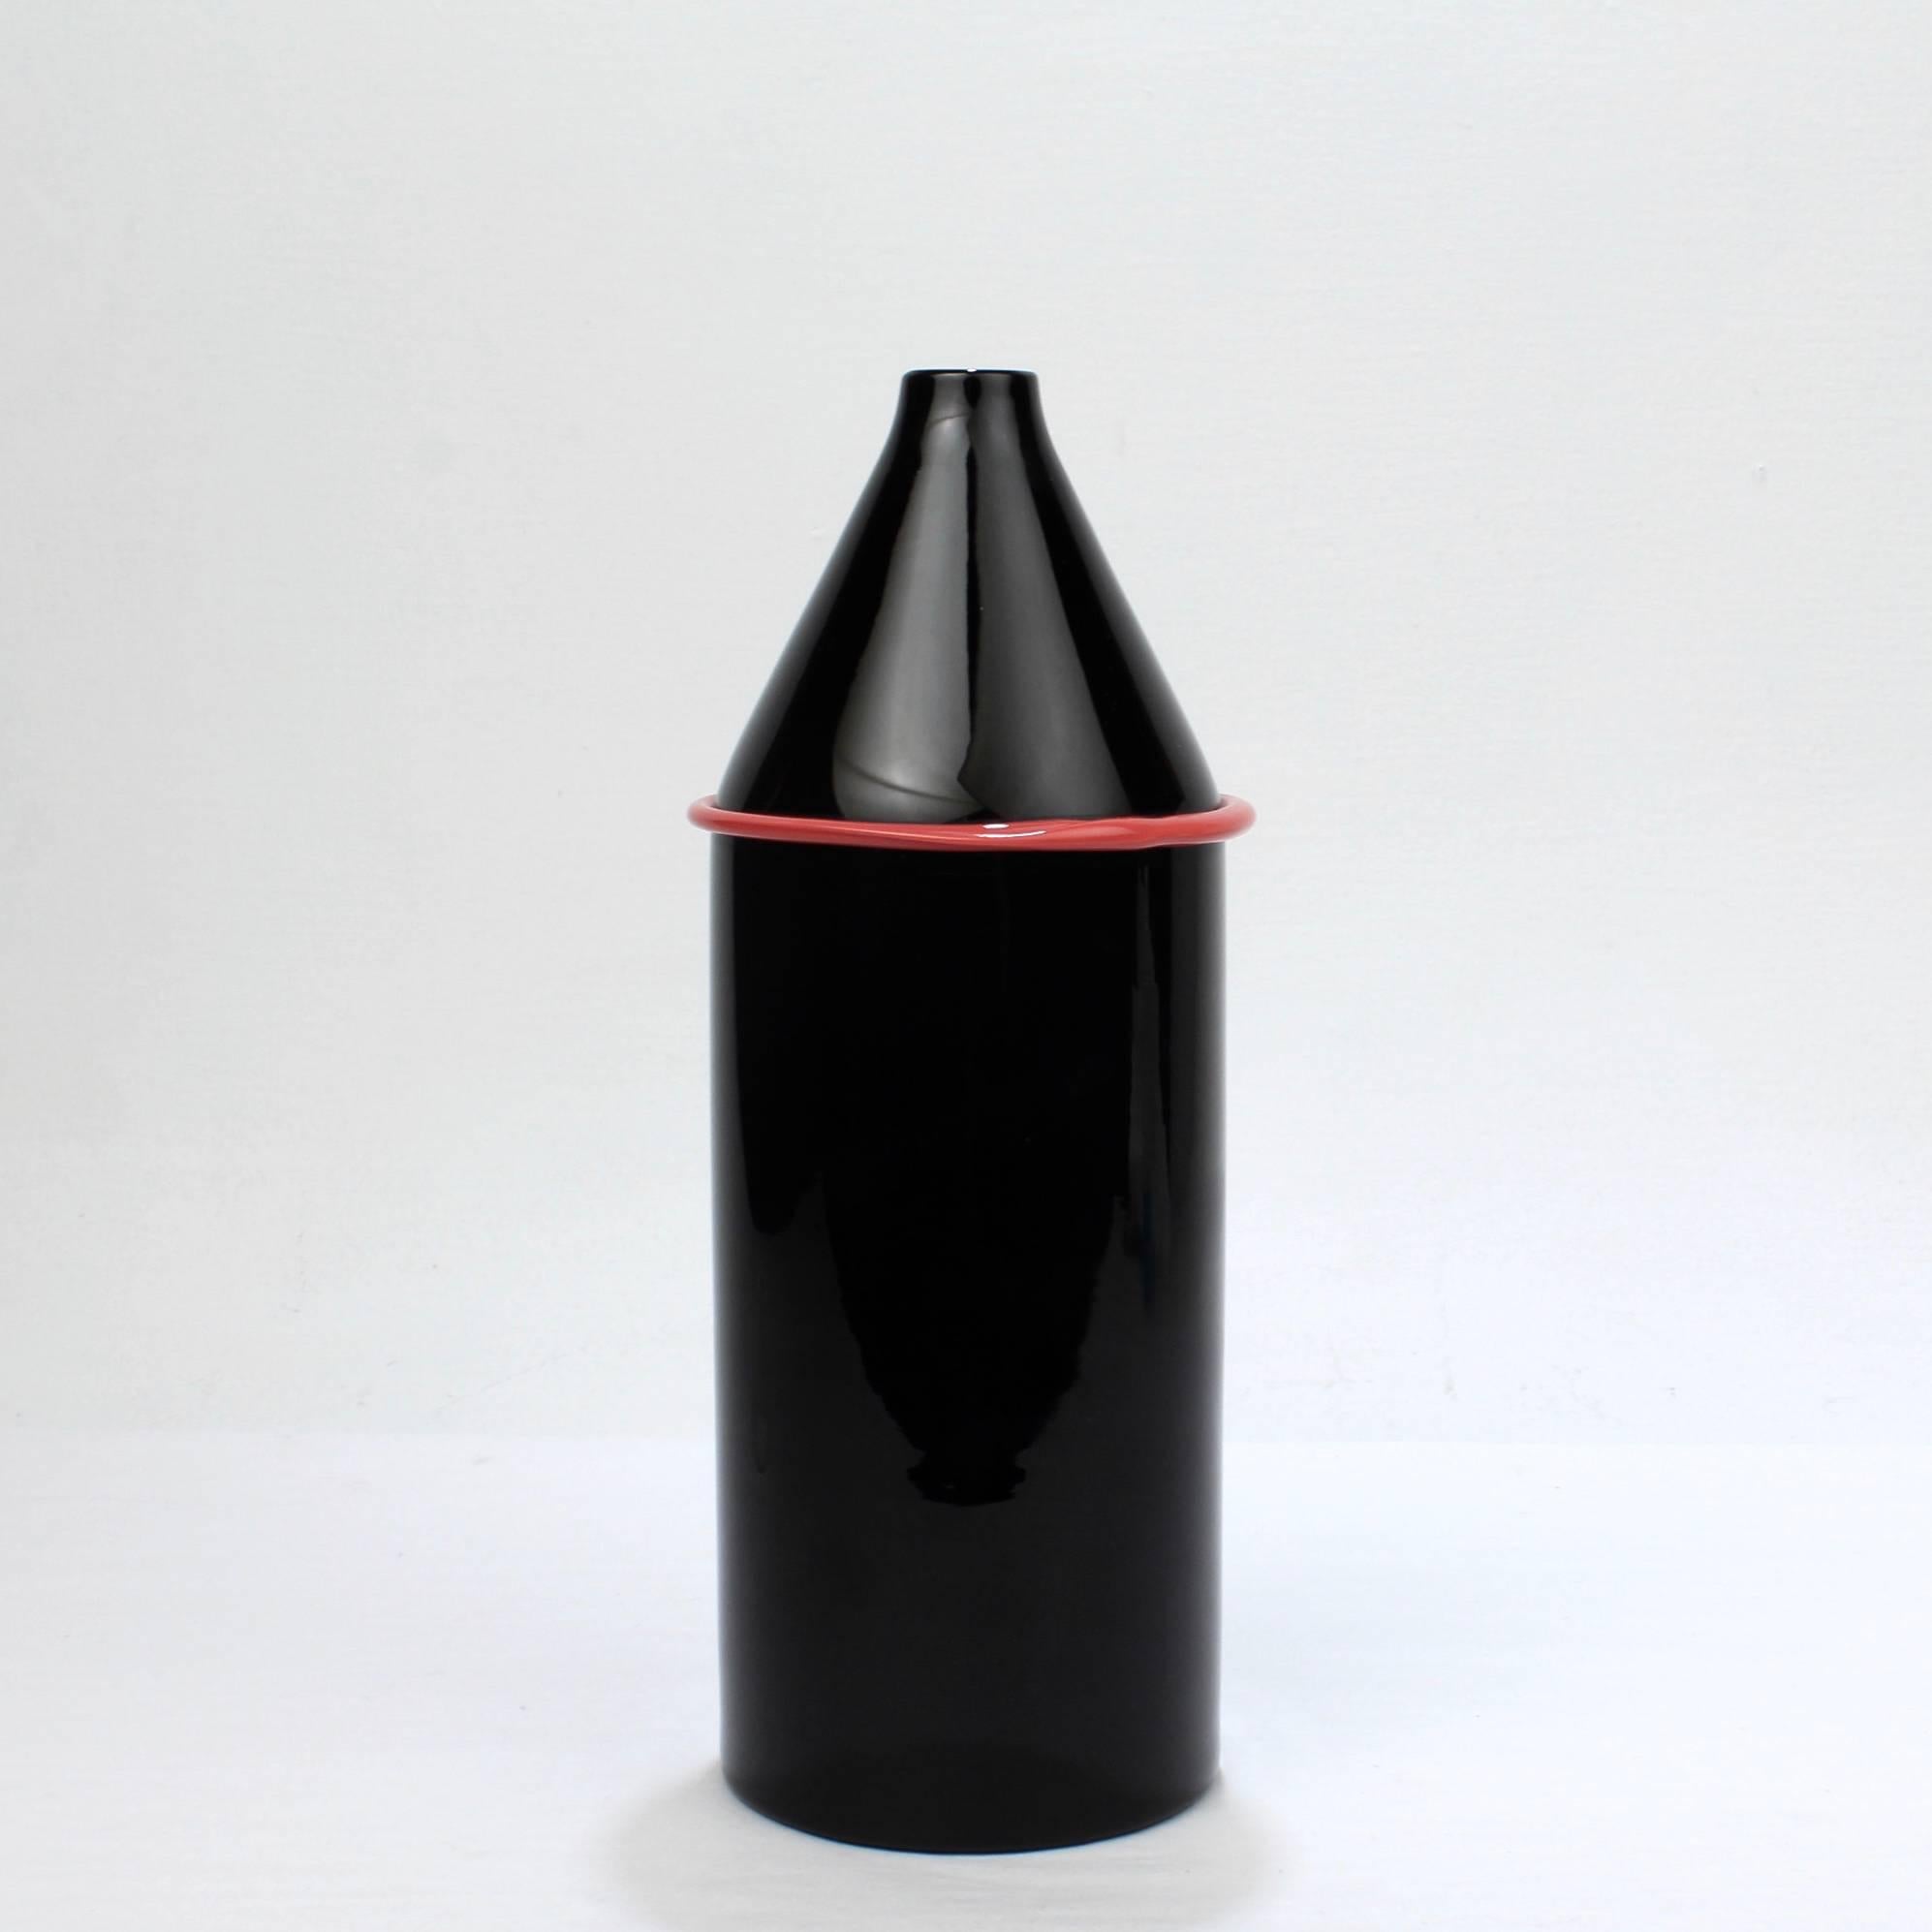 lino tagliapietra black and white vase